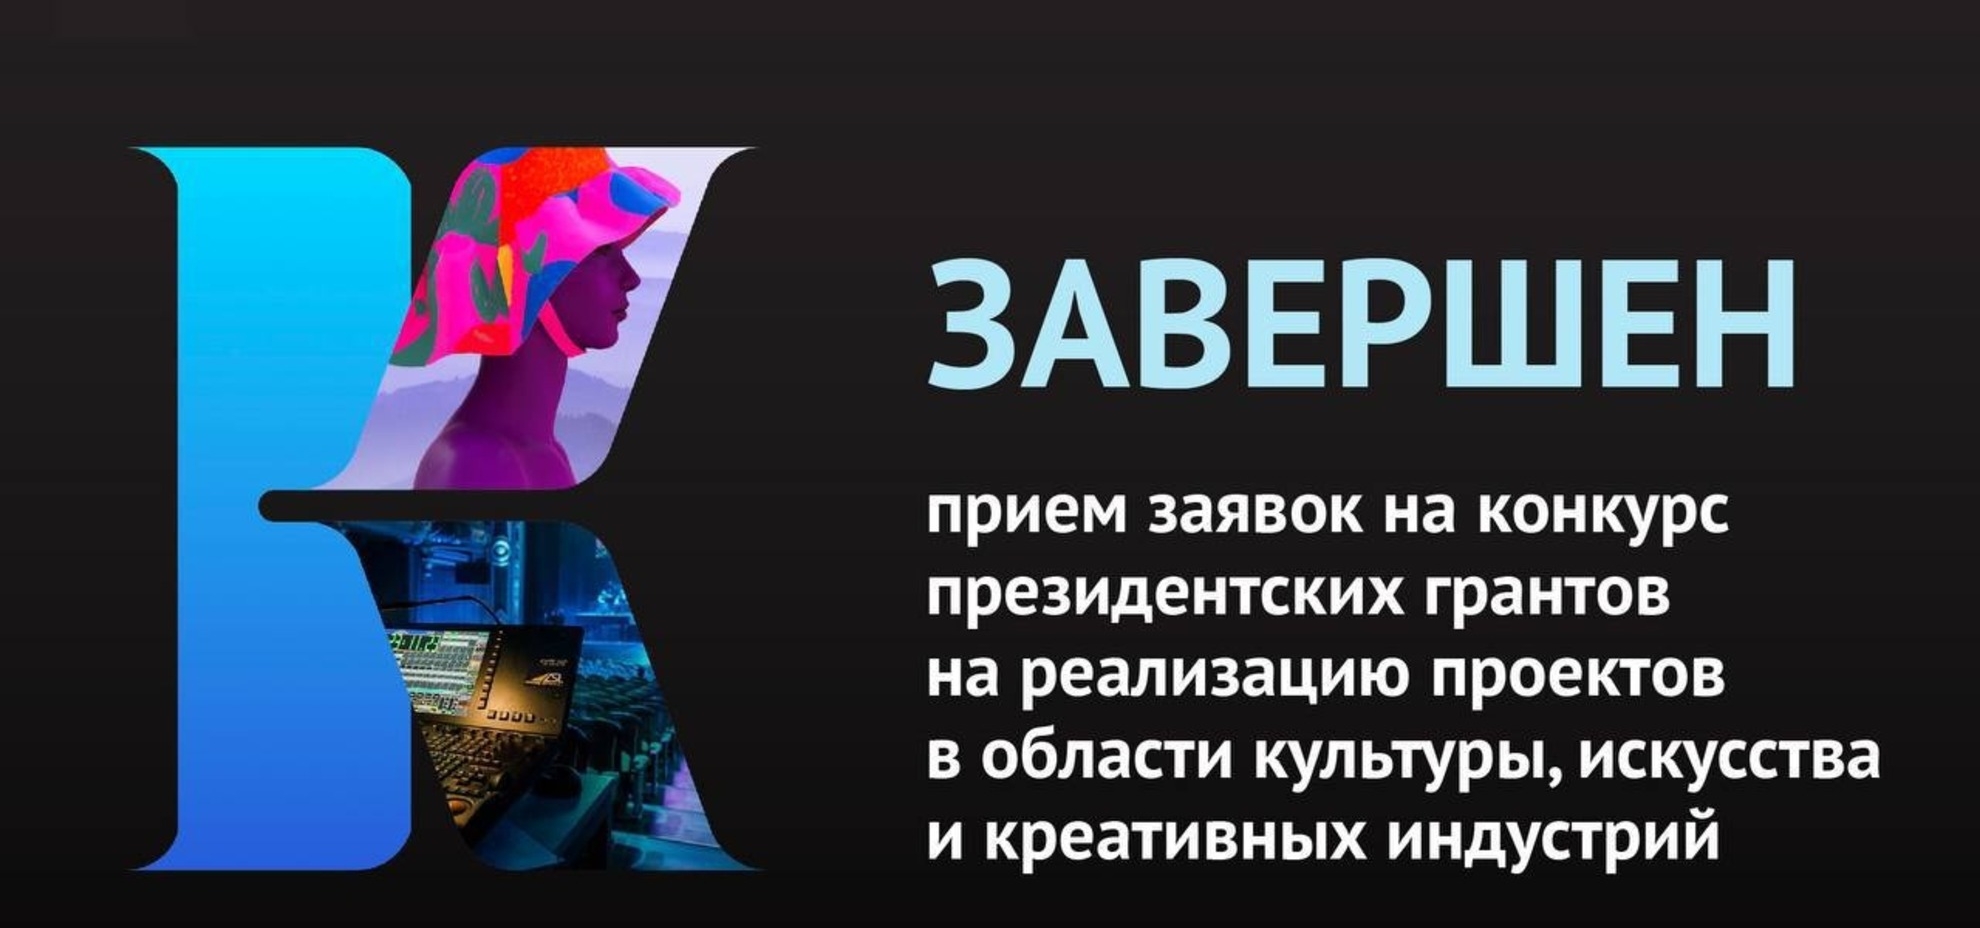 Татарстан среди лидеров по заявкам на гранты ПФКИ